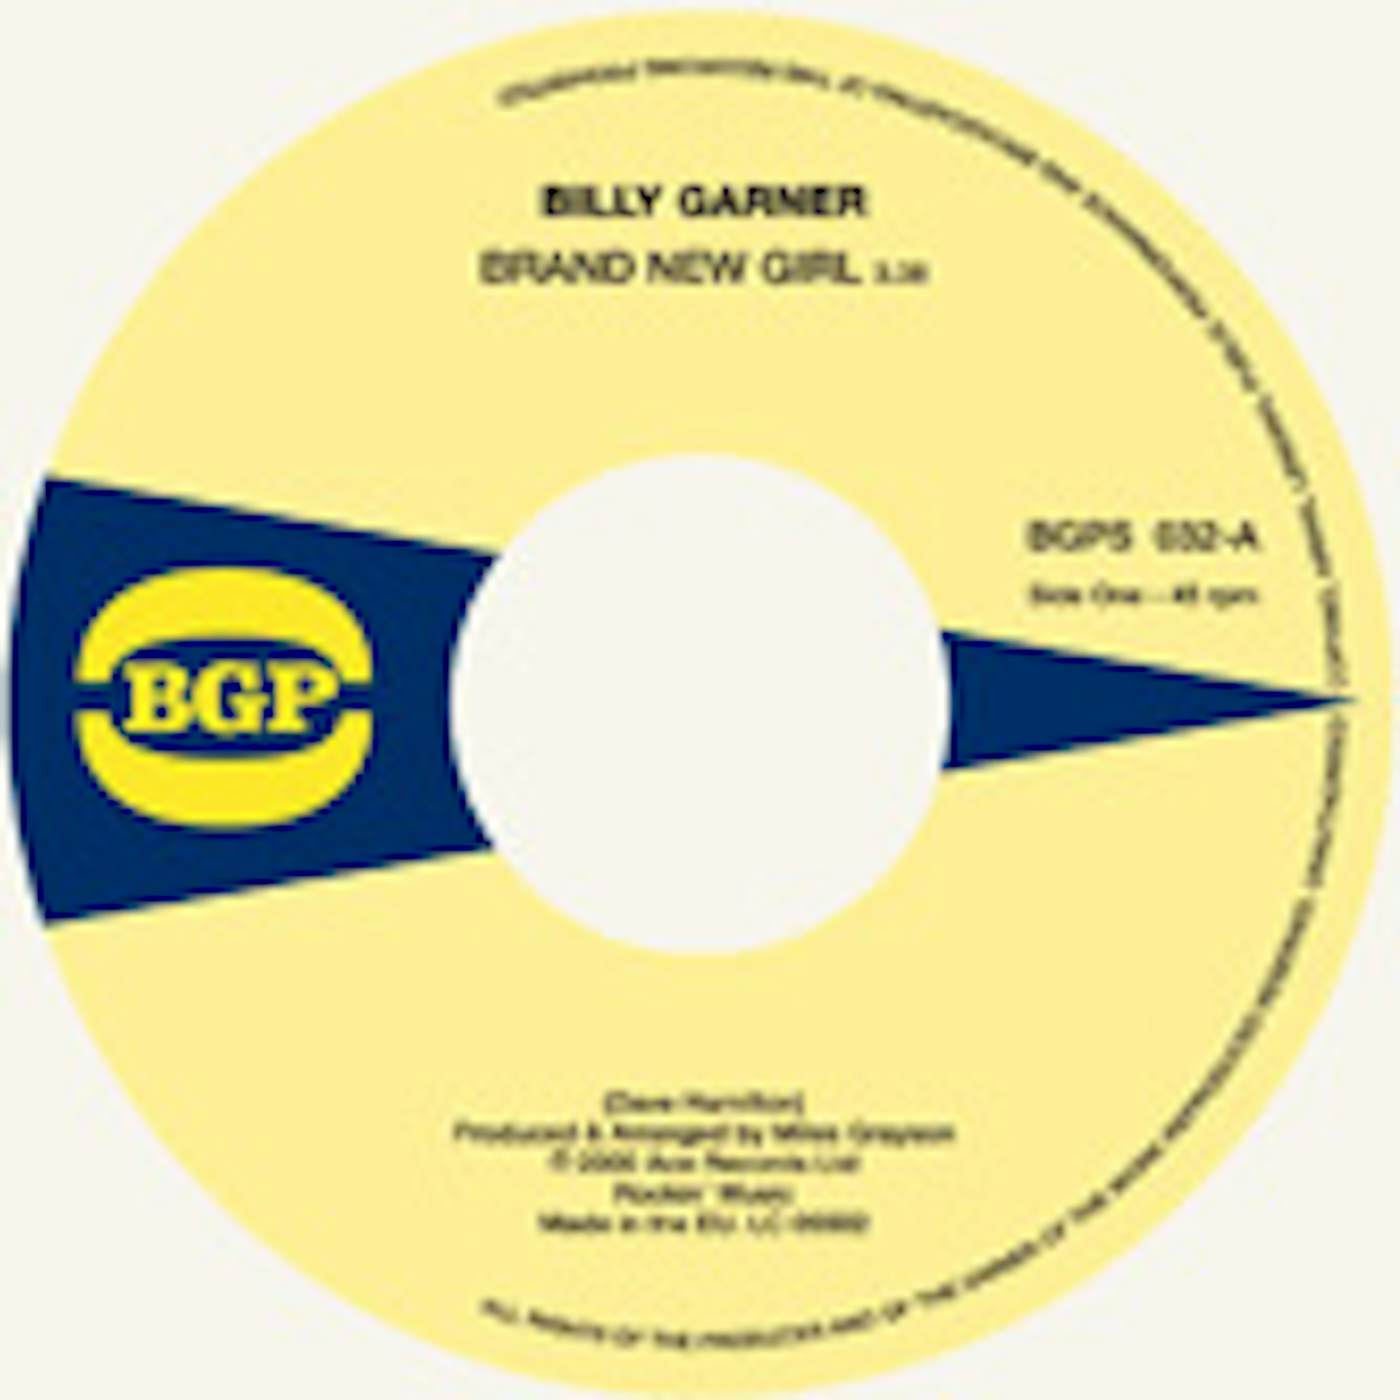 Billy Garner BRAND NEW GIRL / I GOT SOME 1 Vinyl Record